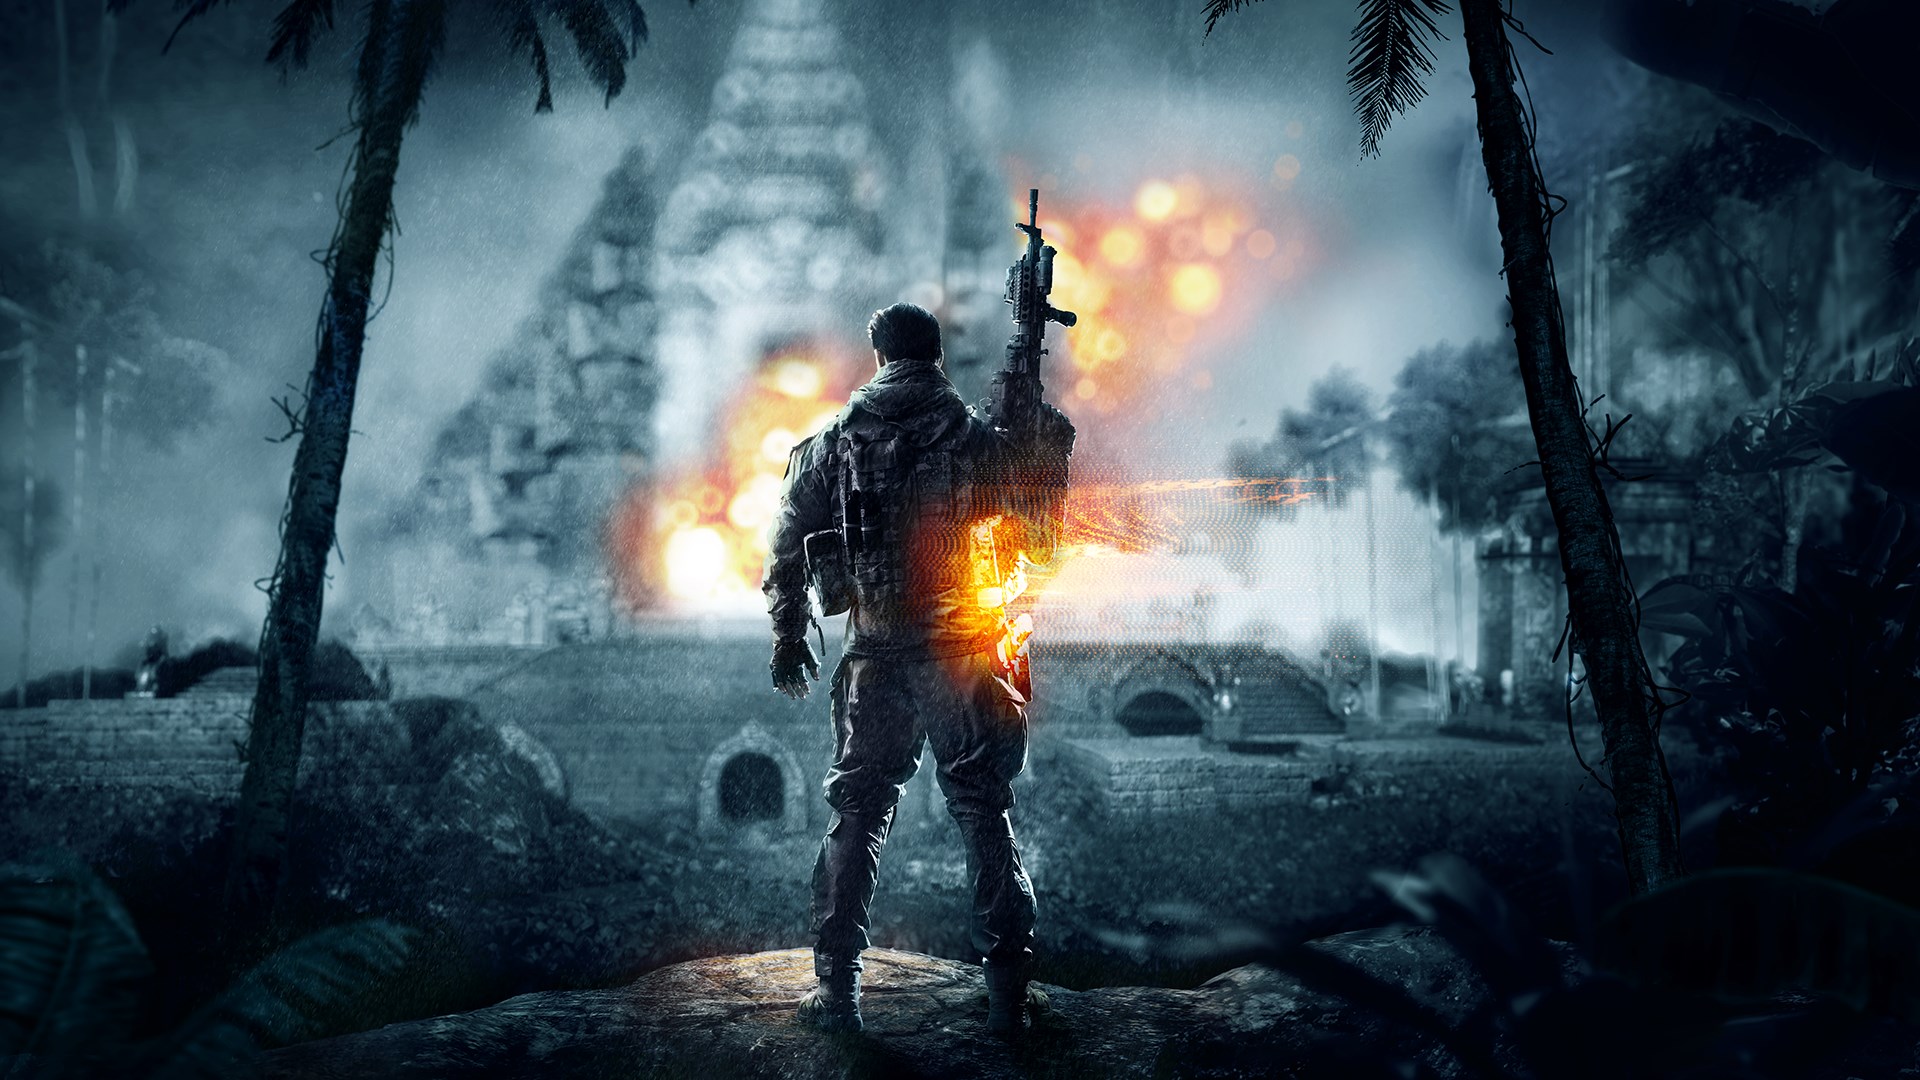 Battlefield 4 - PC - Download